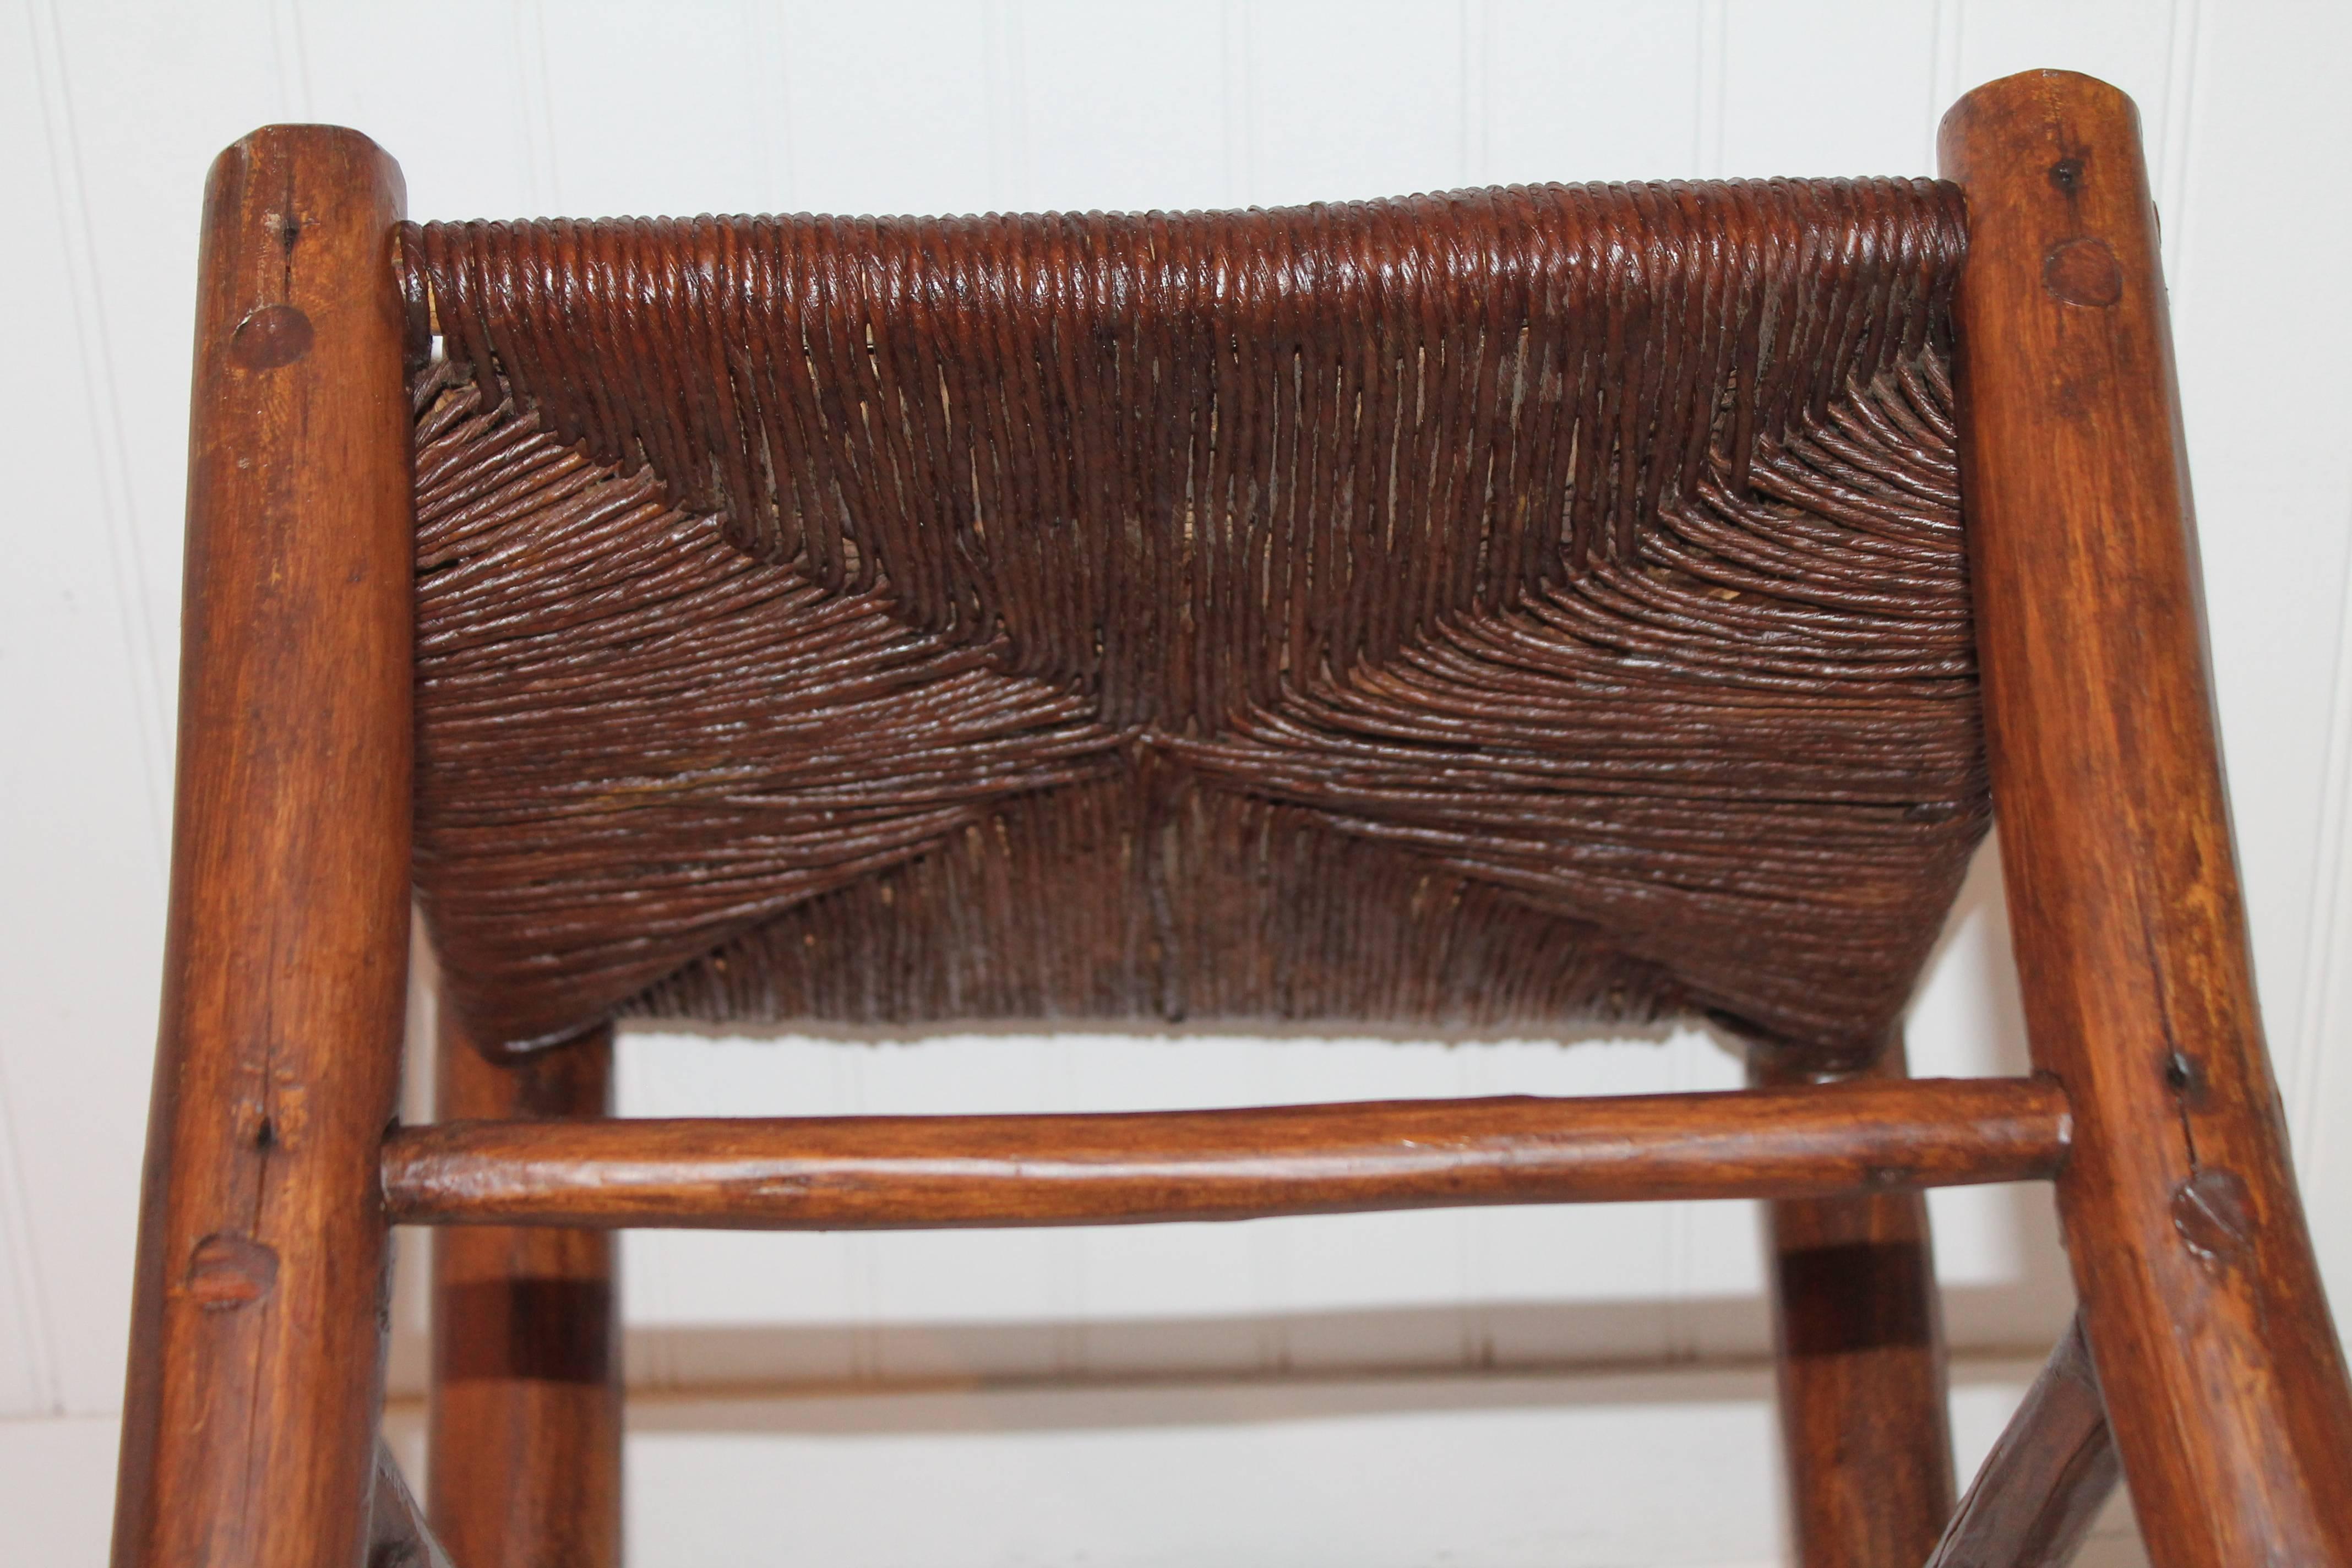 Hand-Woven 19th Century Handmade Hickory Stool or Bench